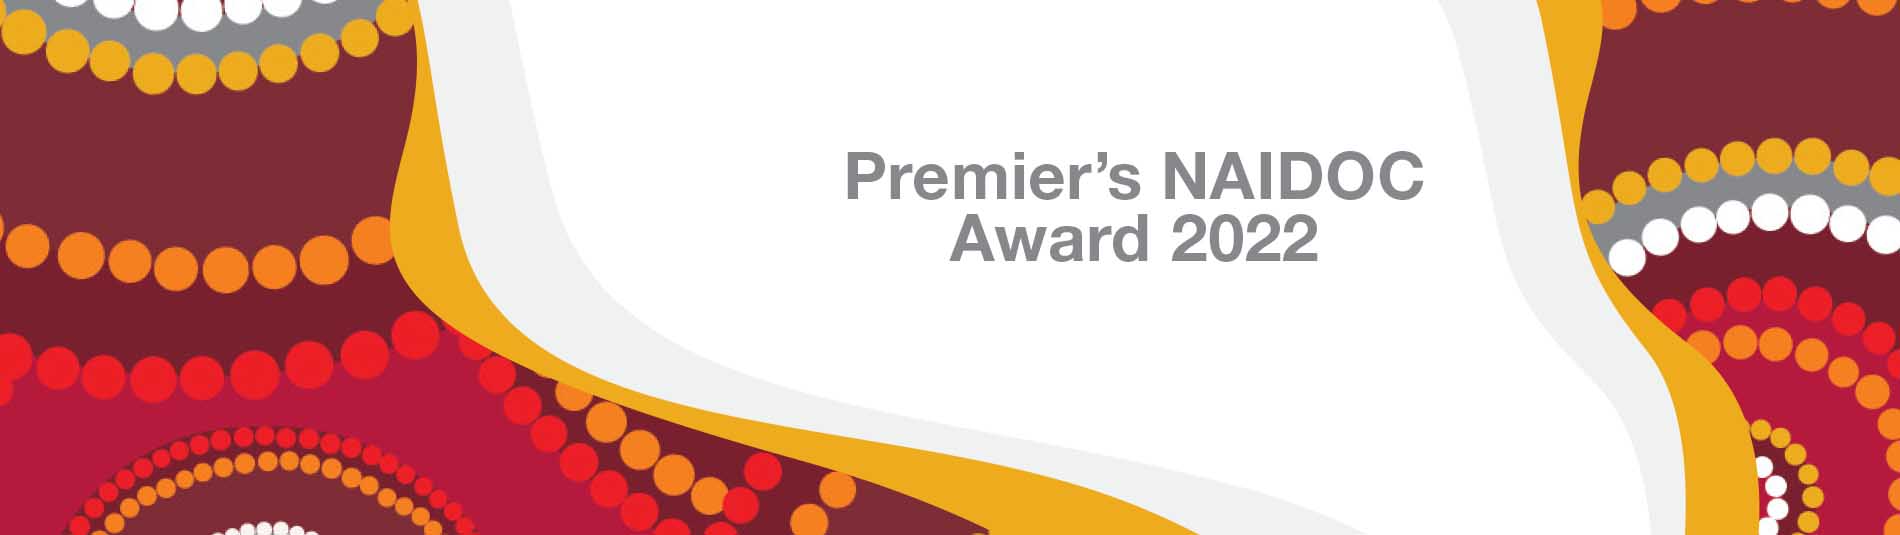 Premier’s NAIDOC Award 2022